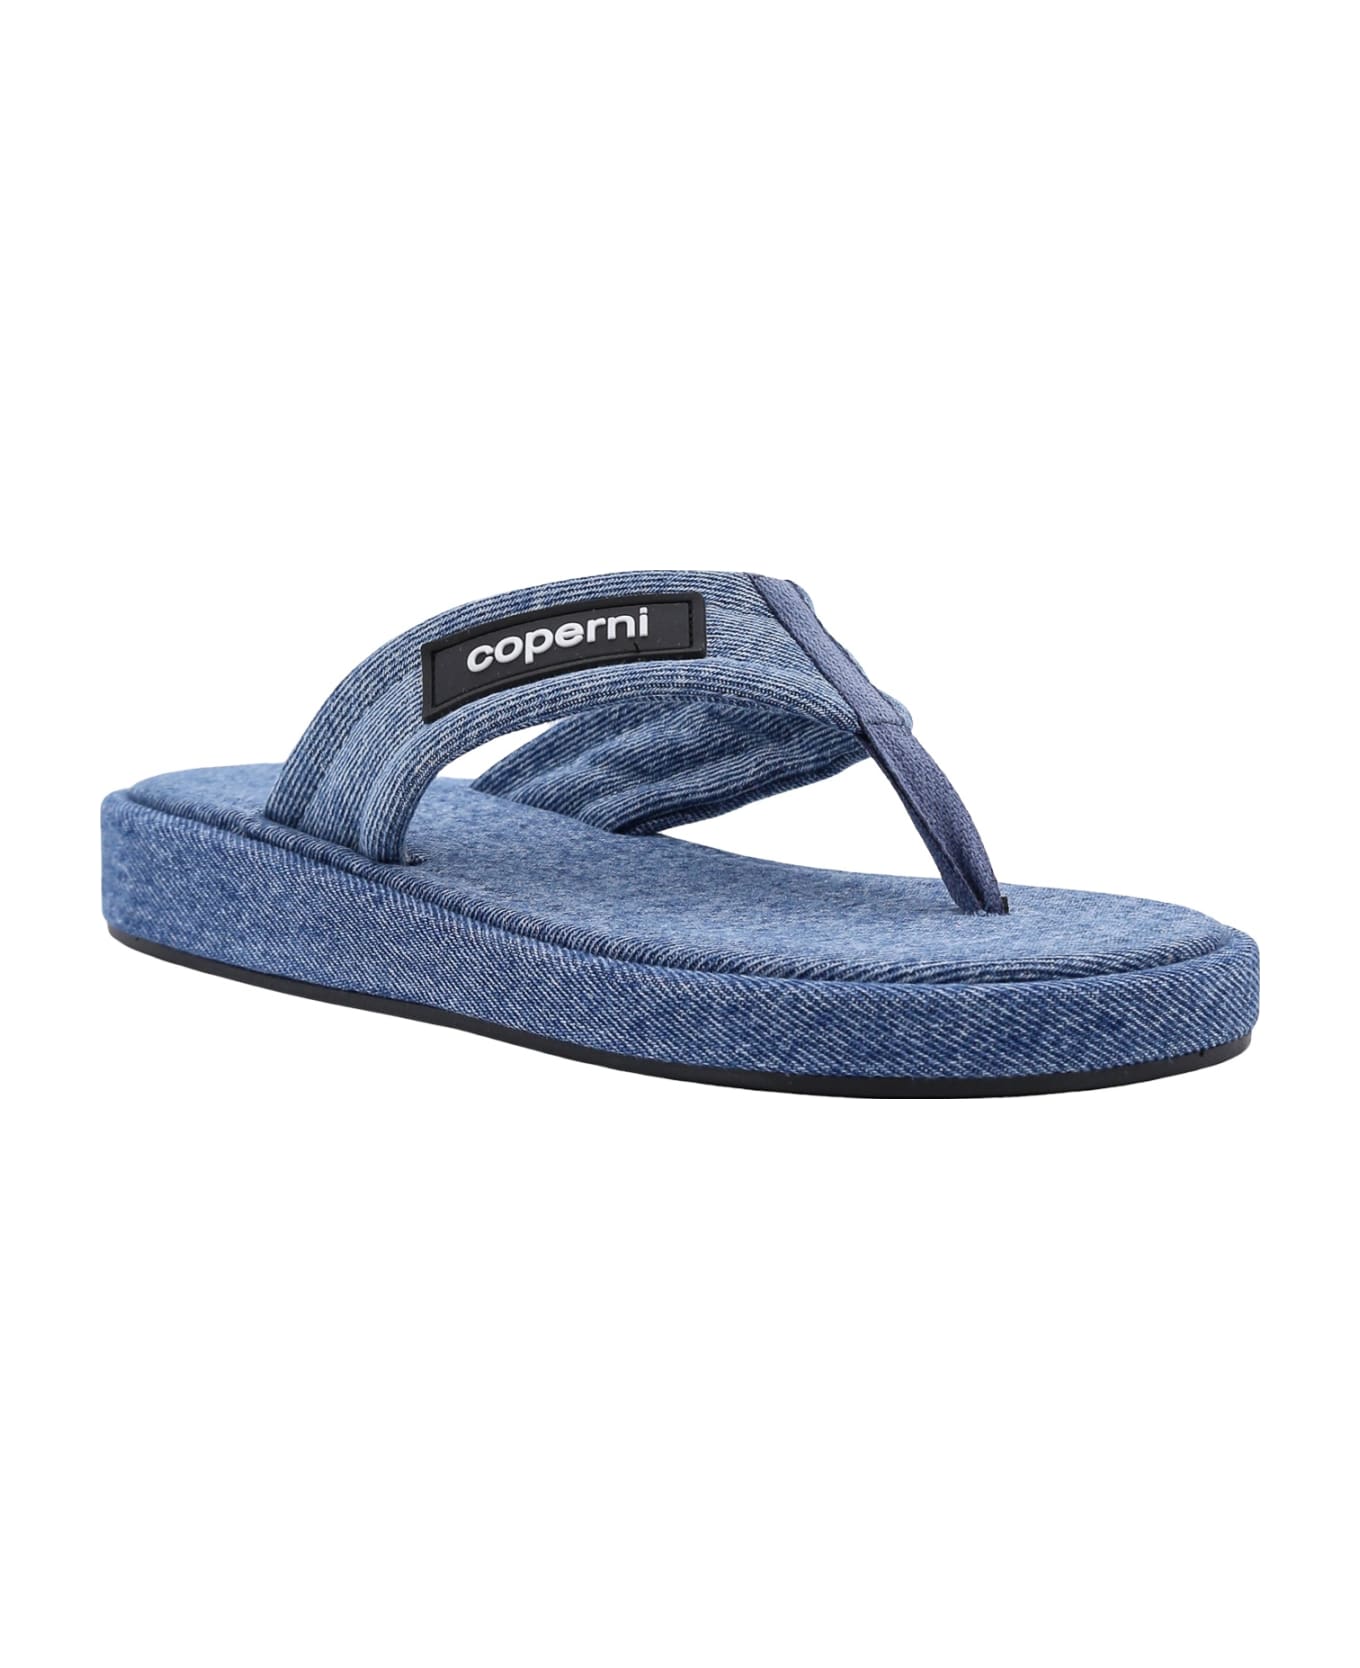 Coperni Sandals - Blue